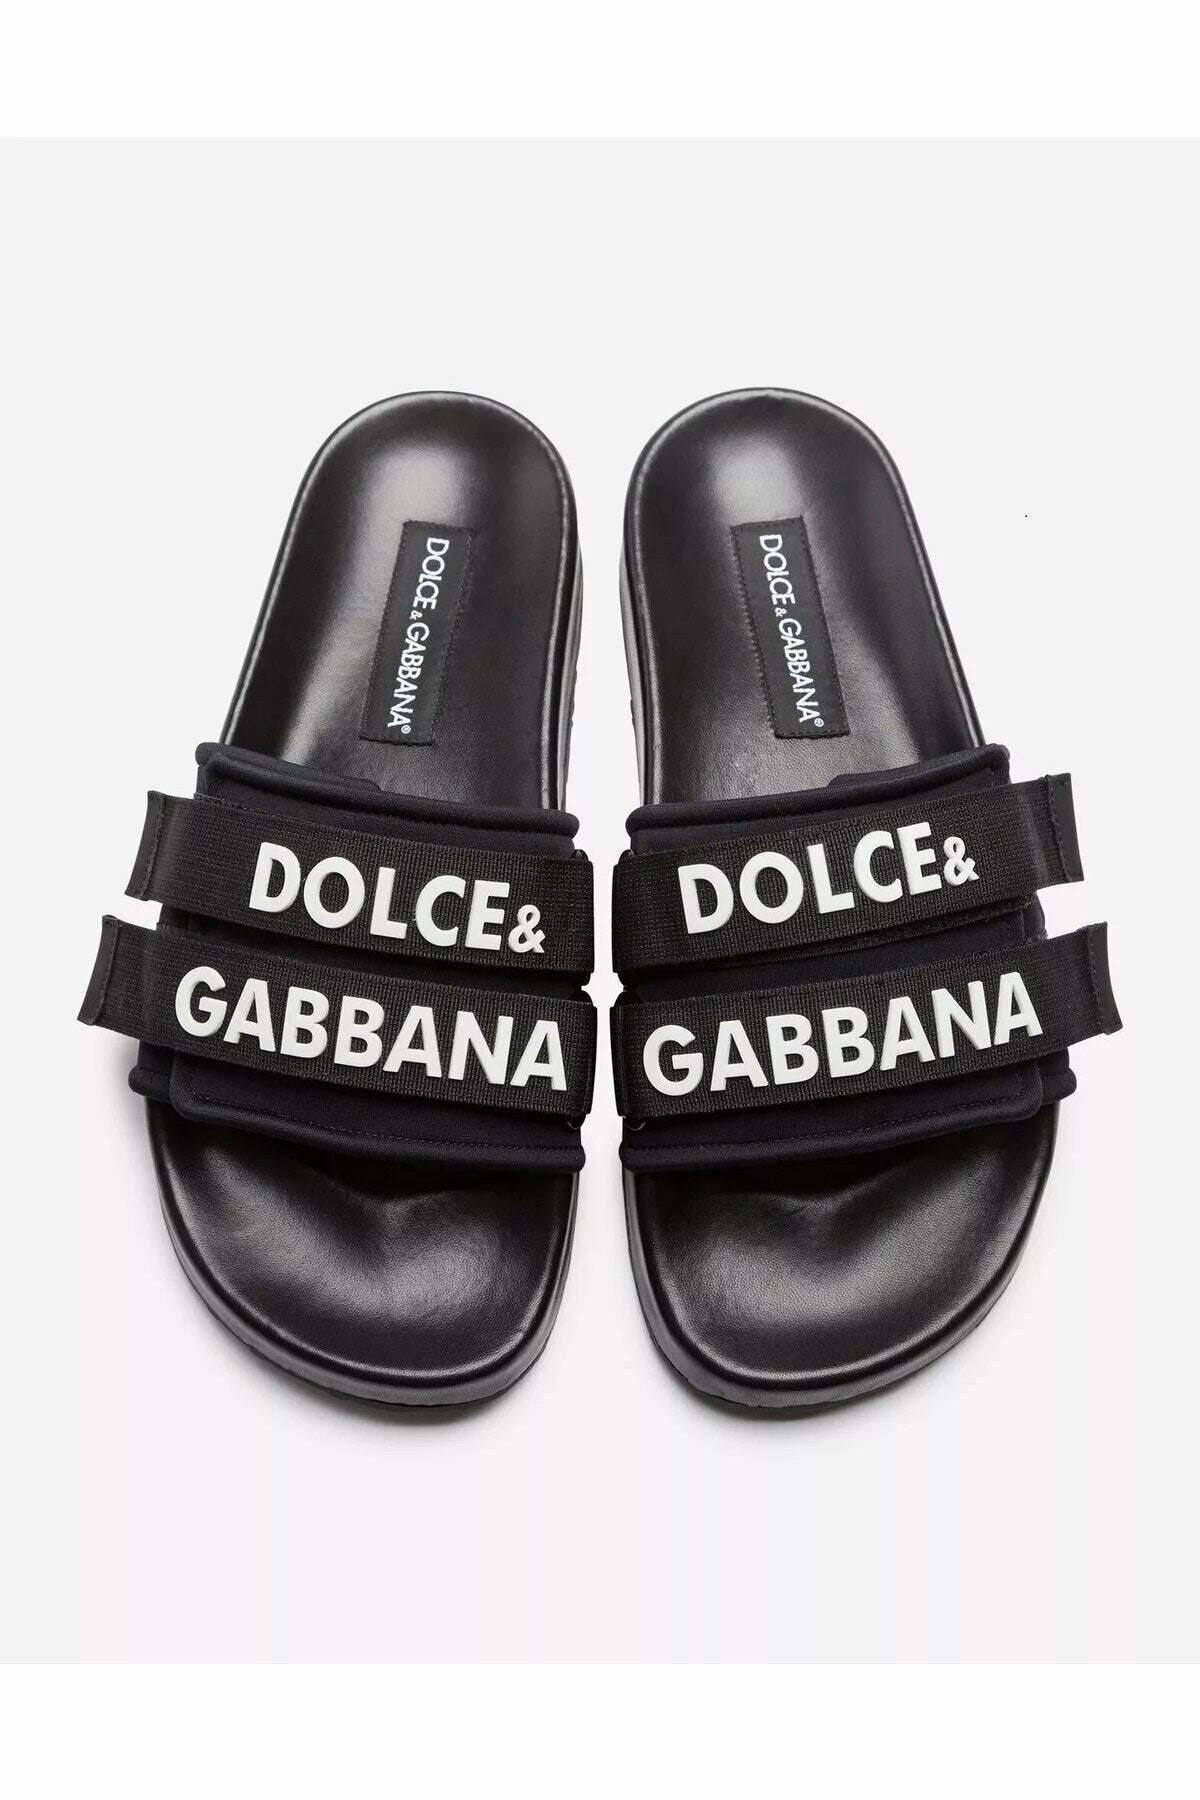 Dolce & Gabbana Black Saint Barth Slides